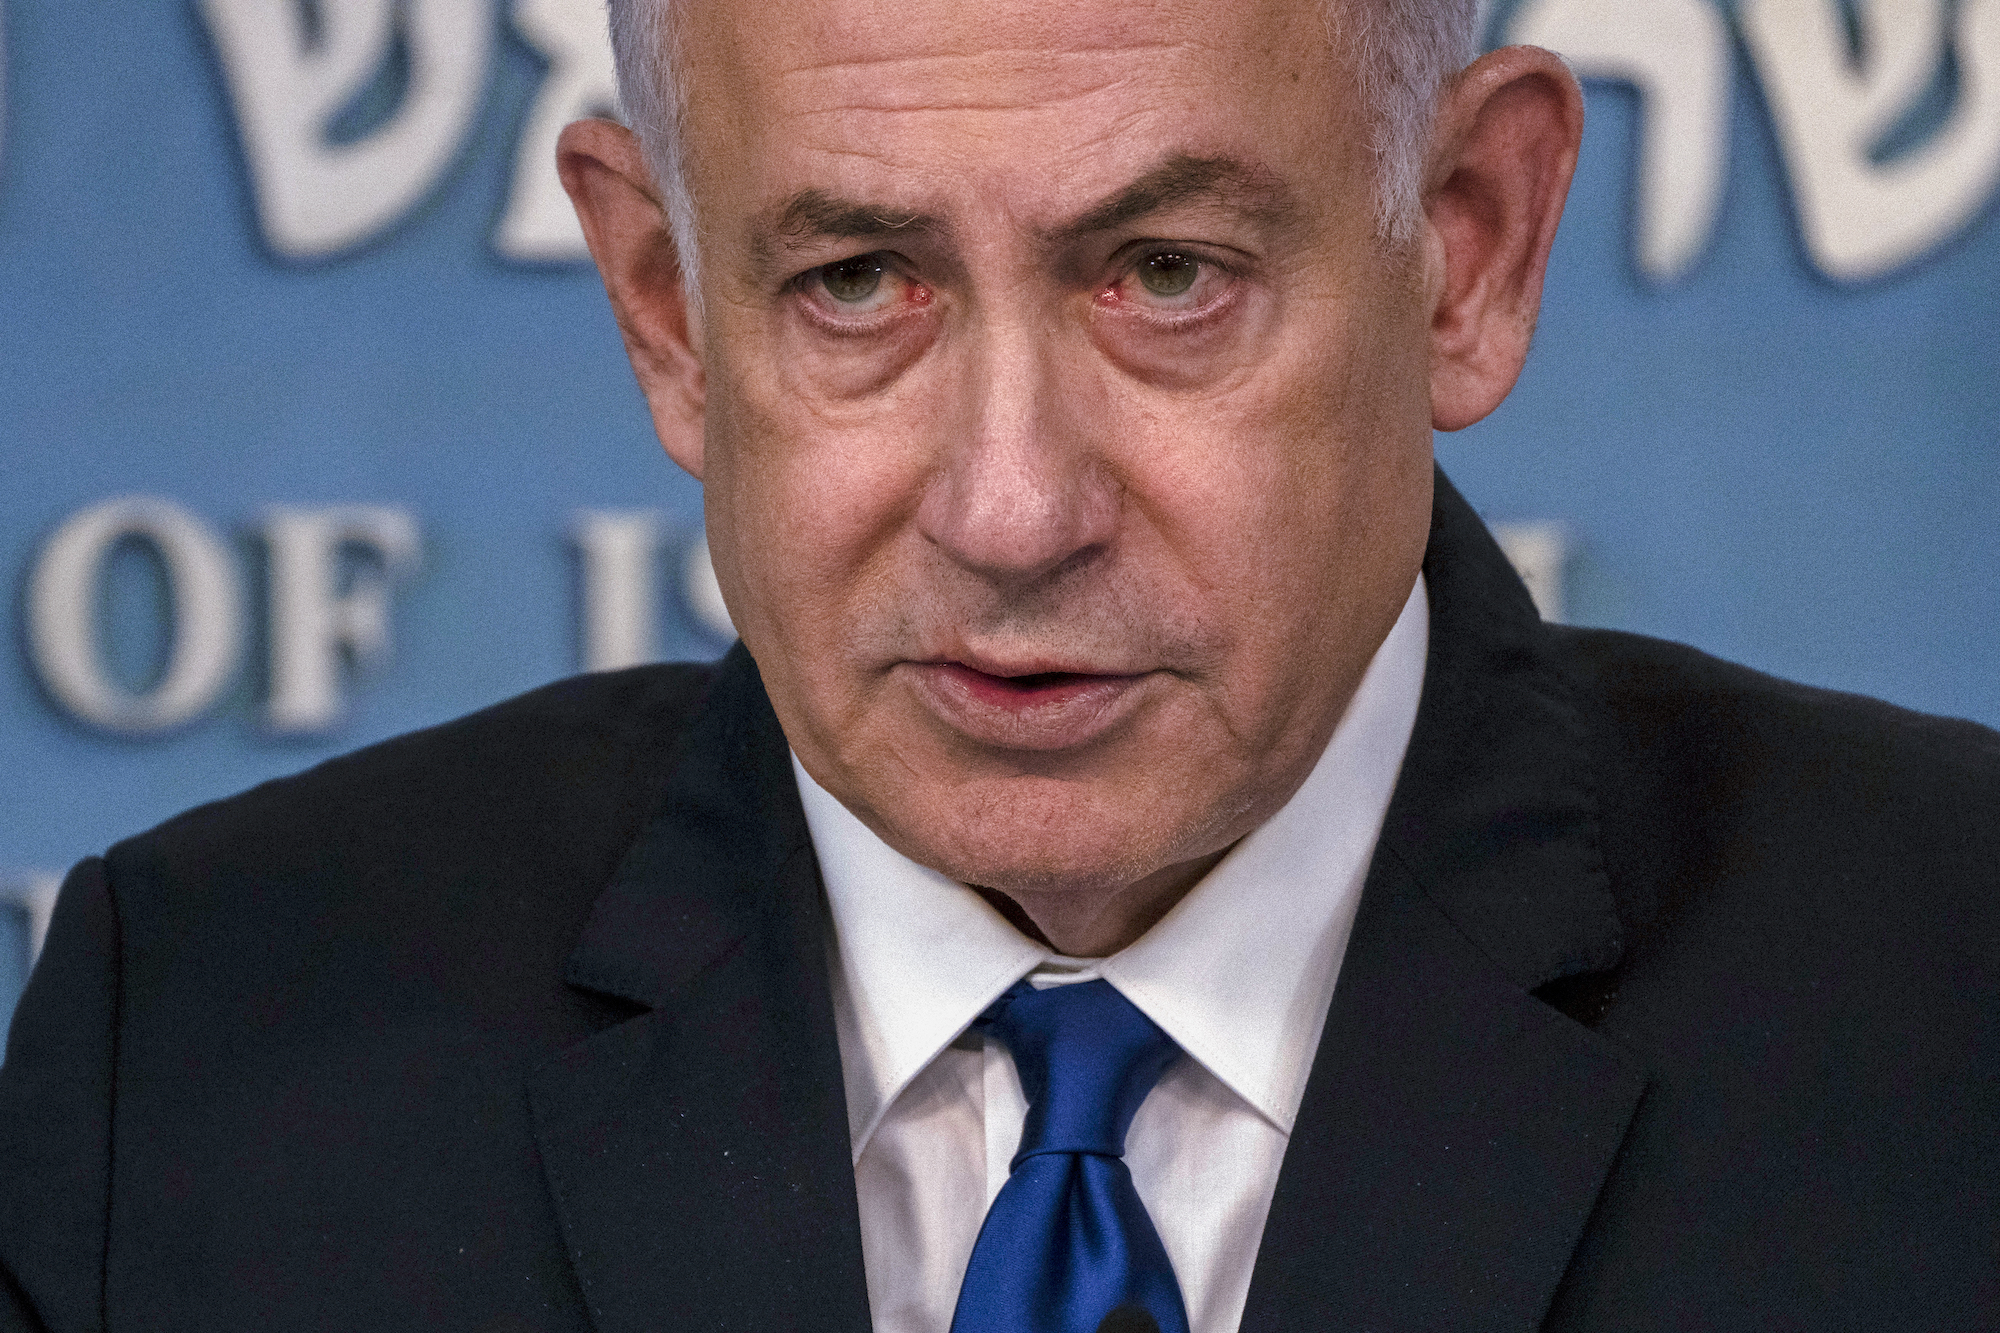 Israeli Prime Minister Benjamin Netanyahu speaks during a joint press conference in Jerusalem on March 17.